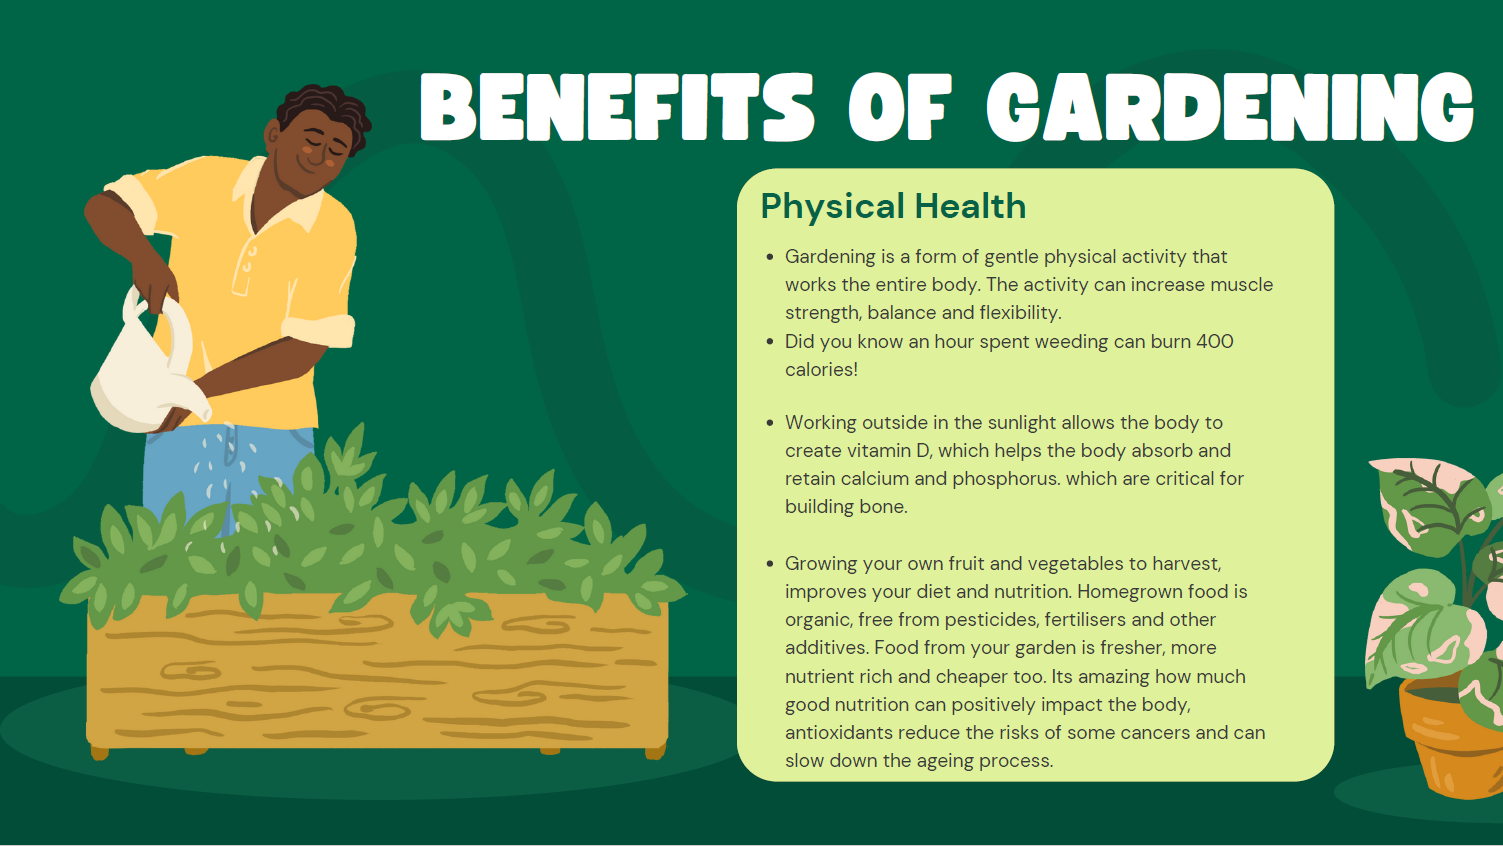 Gardening Physical Health